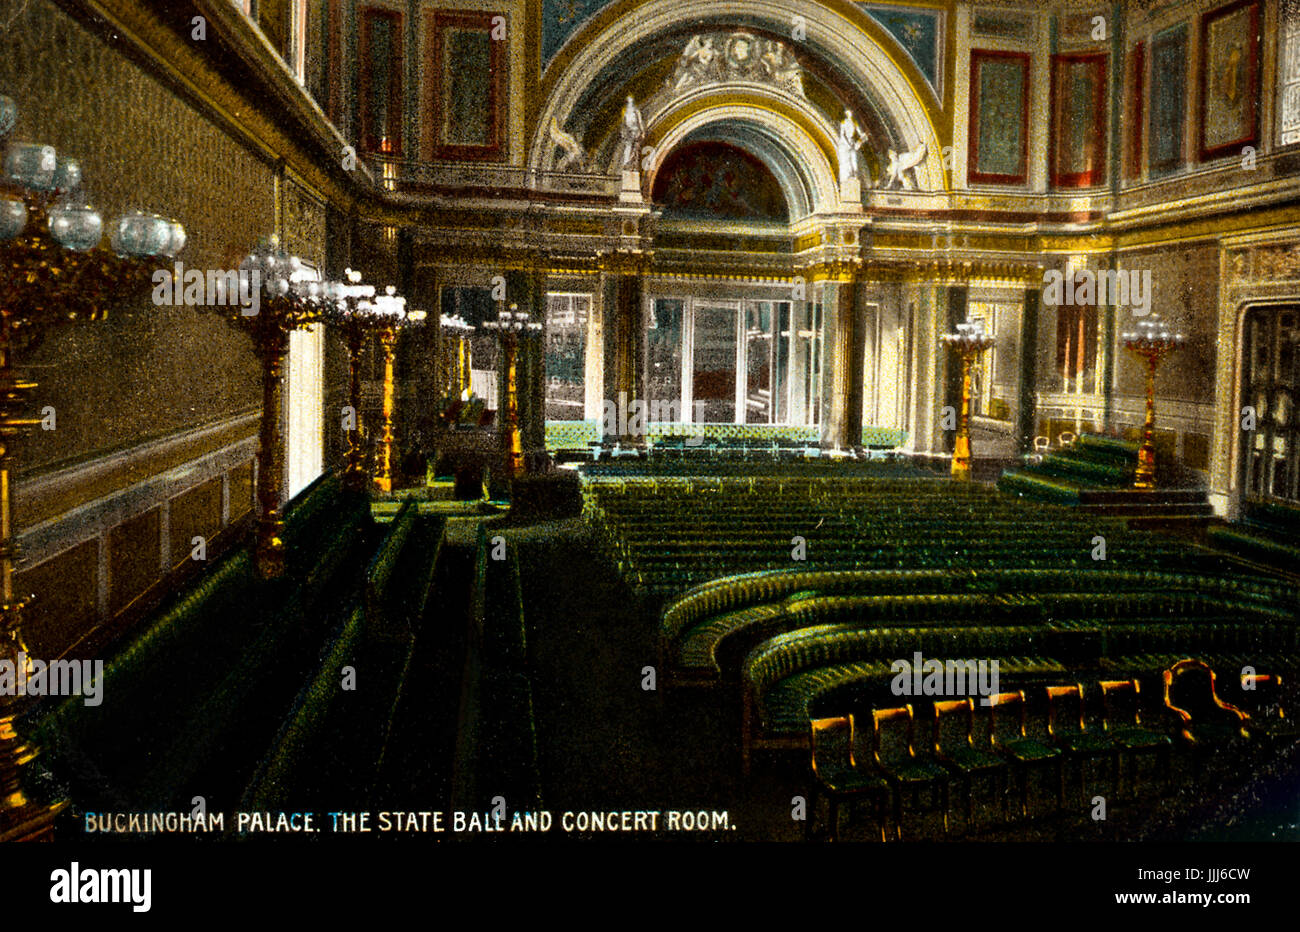 London - Buckingham Palace, Interieur: Staatsball und Konzertsaal. Foto: B. Morris. Stockfoto